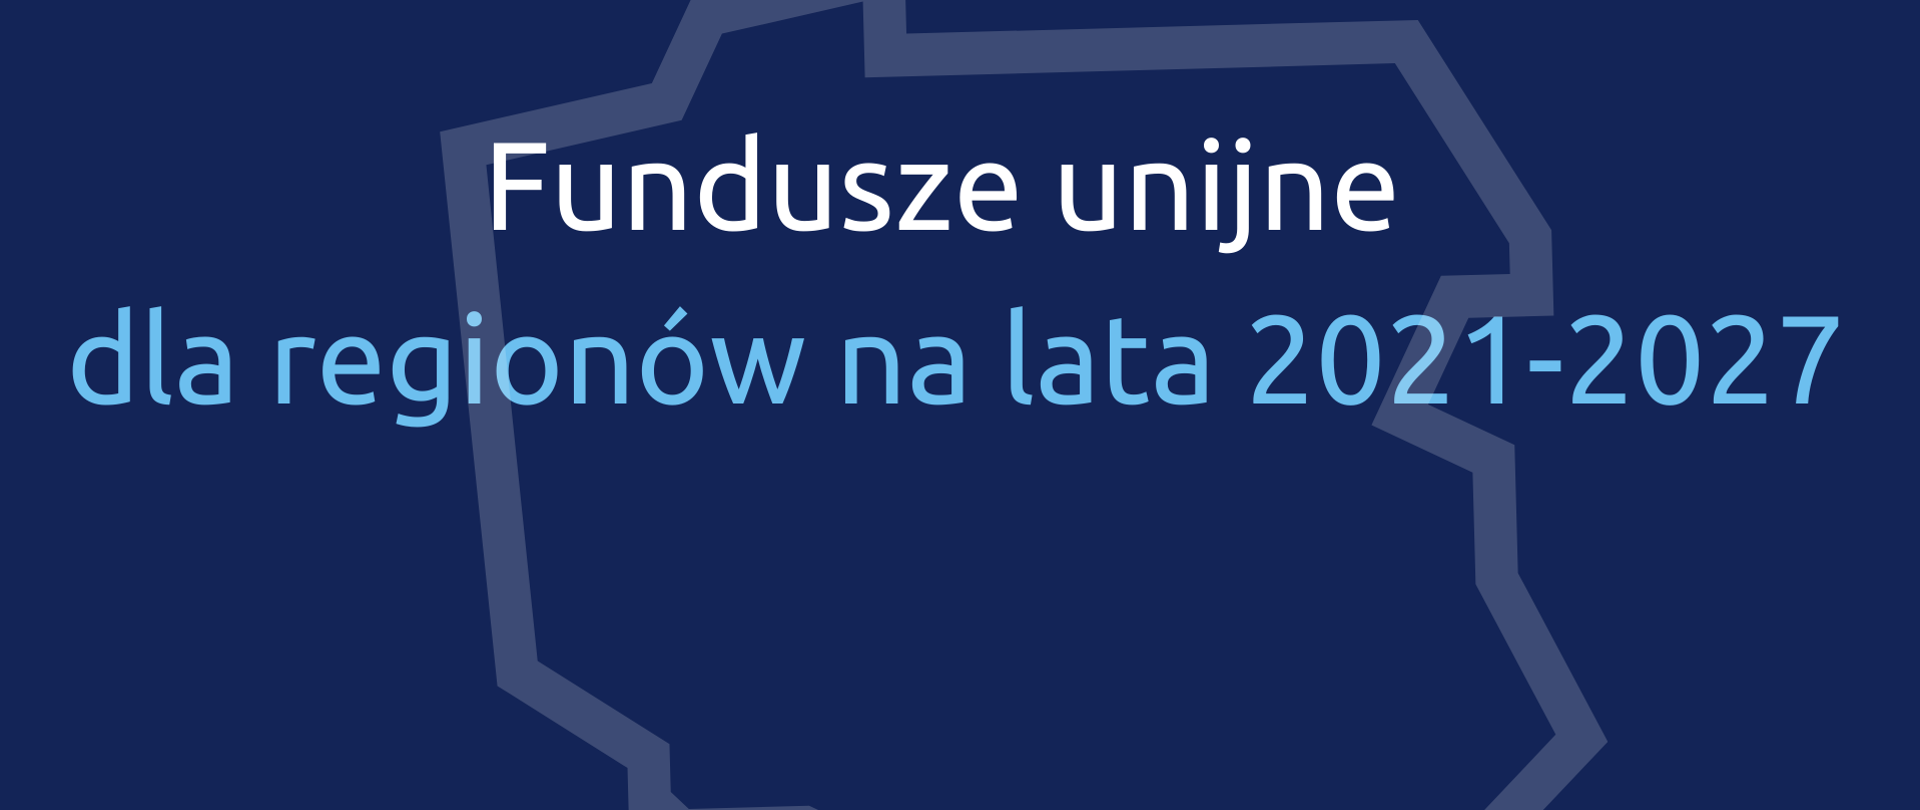 Na tle konturu polski napis: Fundusze unijne dla regionów na lata 2021-2027